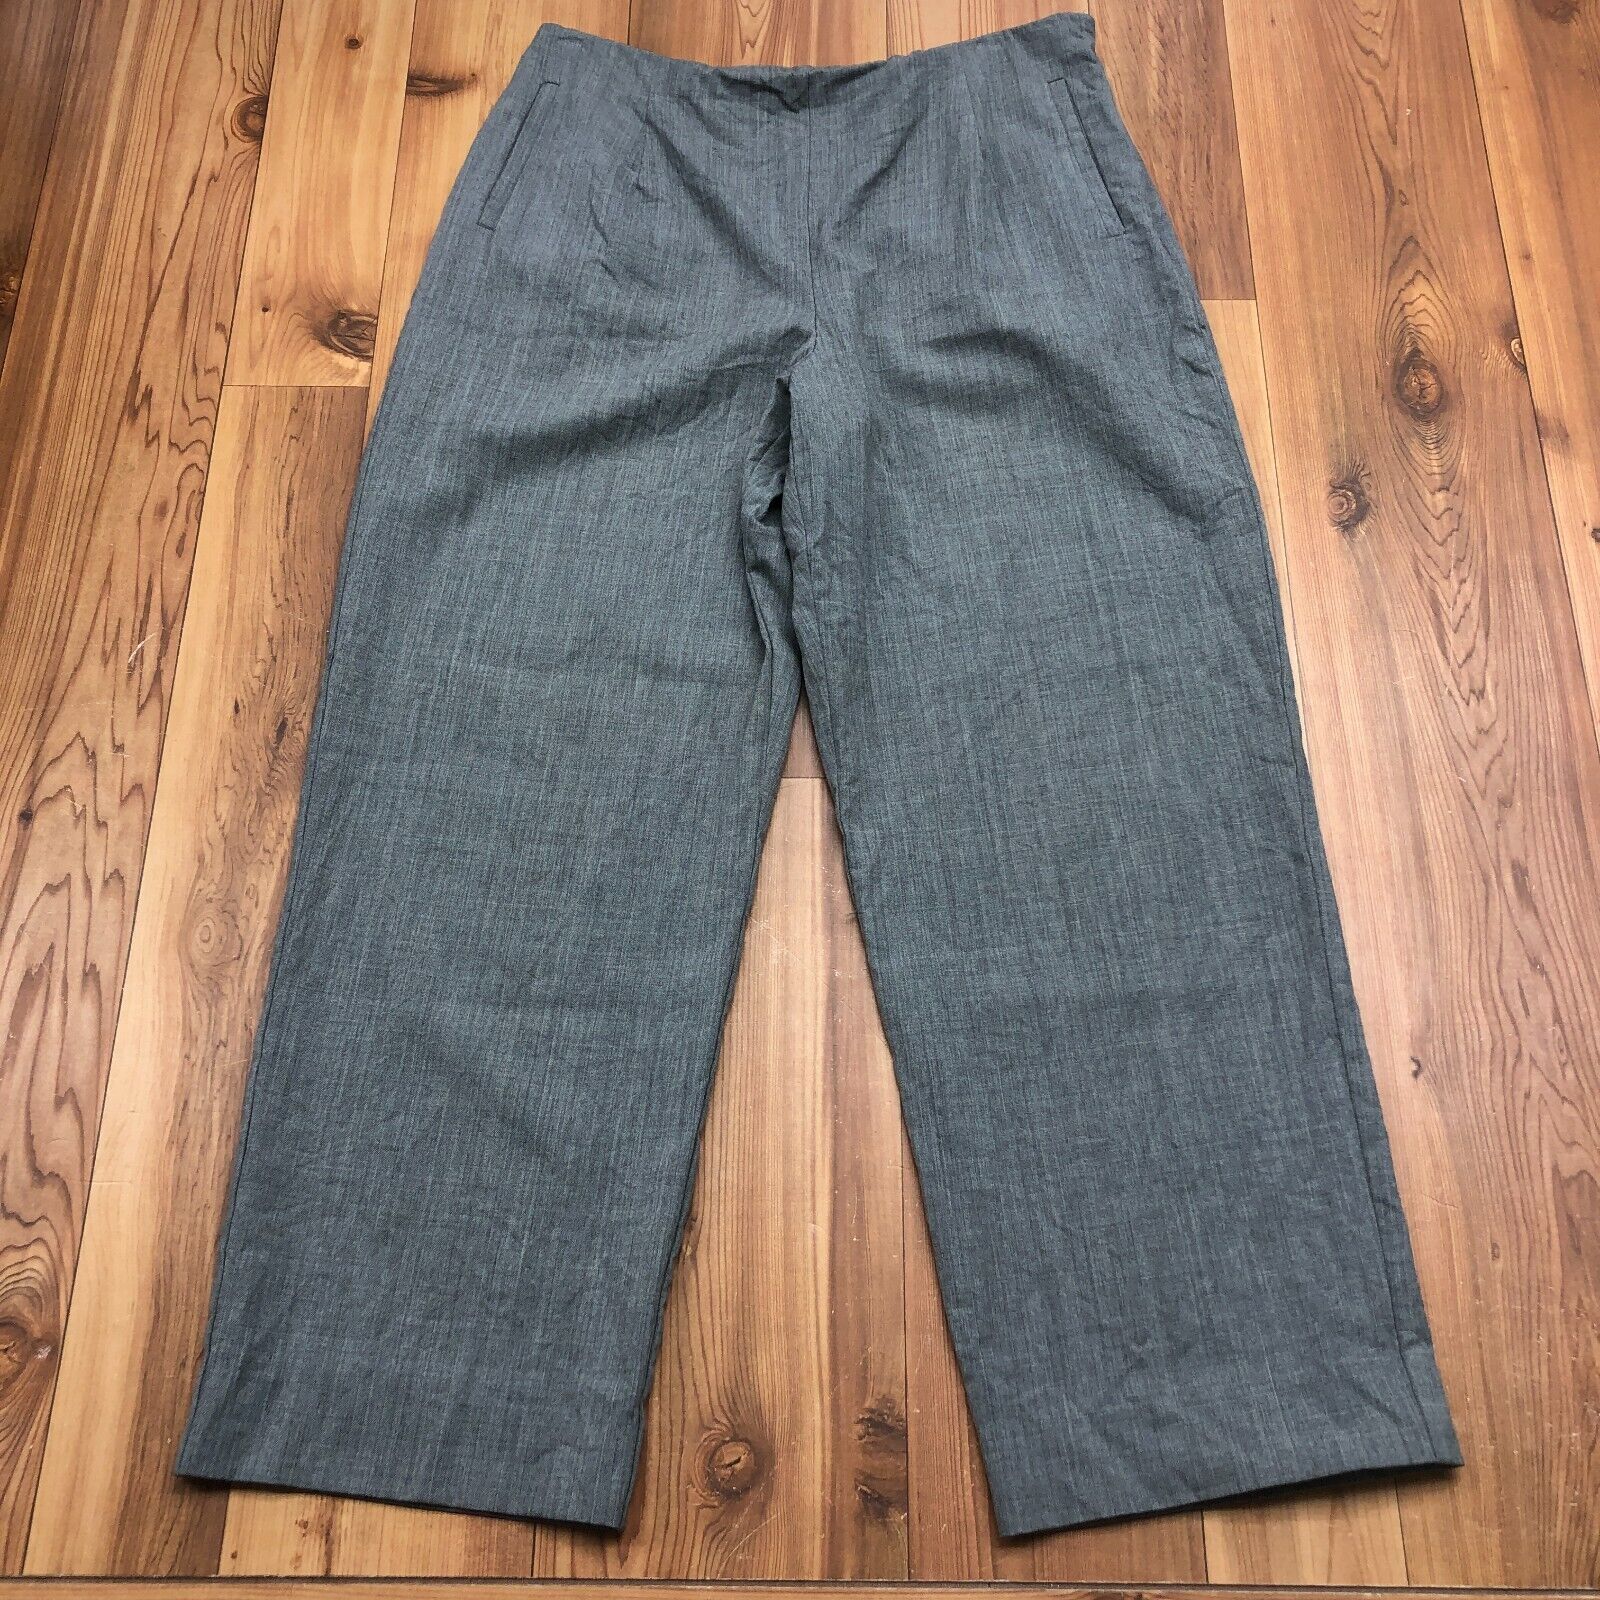 Vintage Pendleton Grey Flat Front Pockets Side Button Dress Pants Womens Size 16